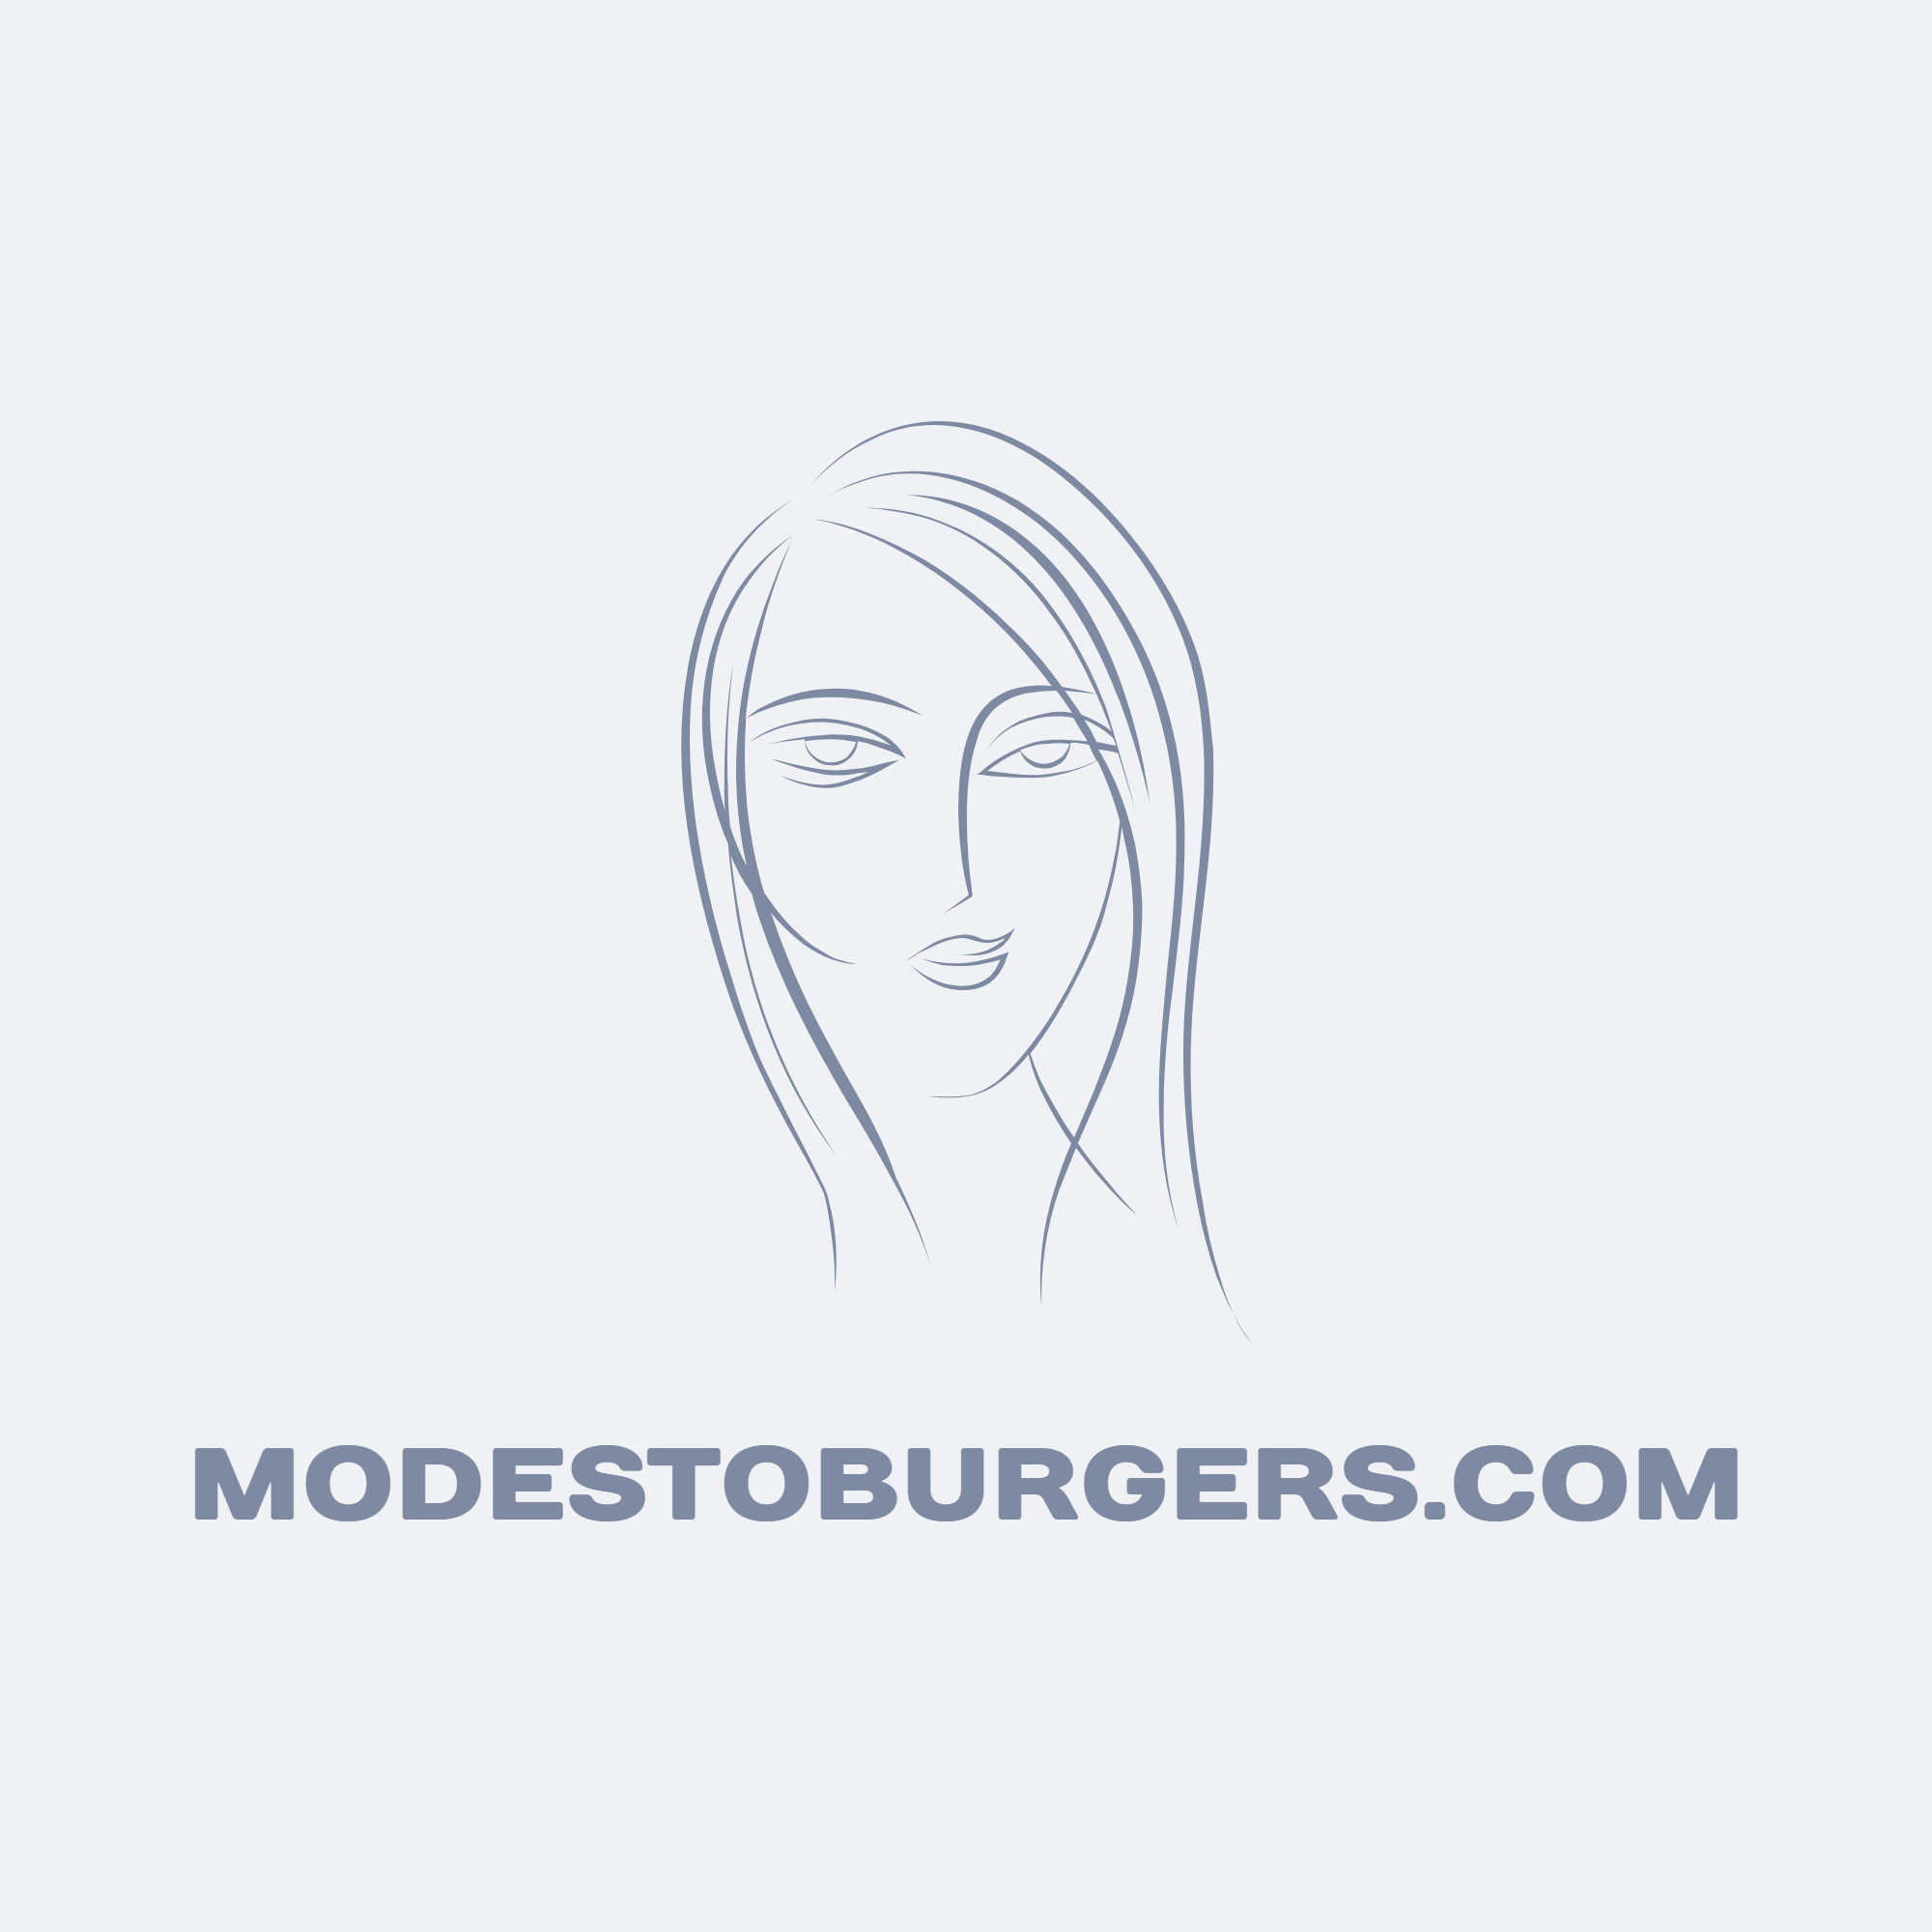 modestoburgers.com